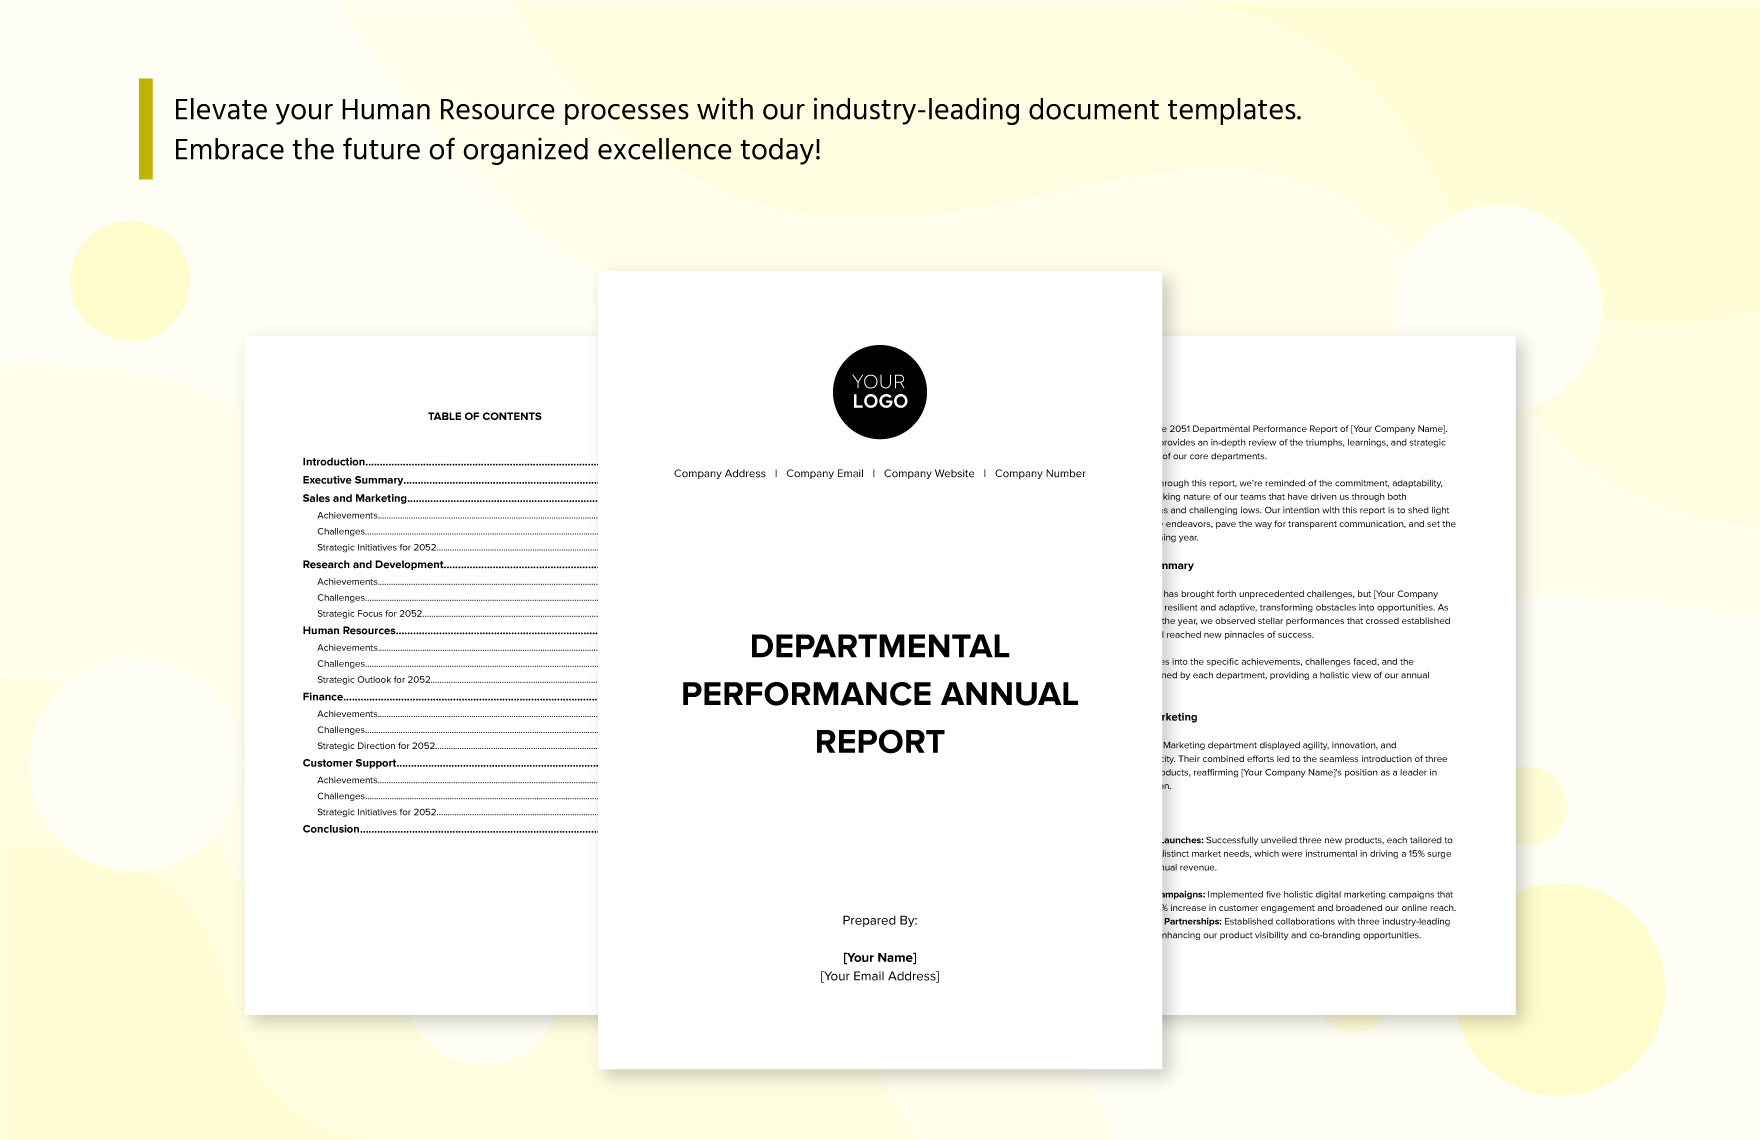 Departmental Performance Annual Report HR Template